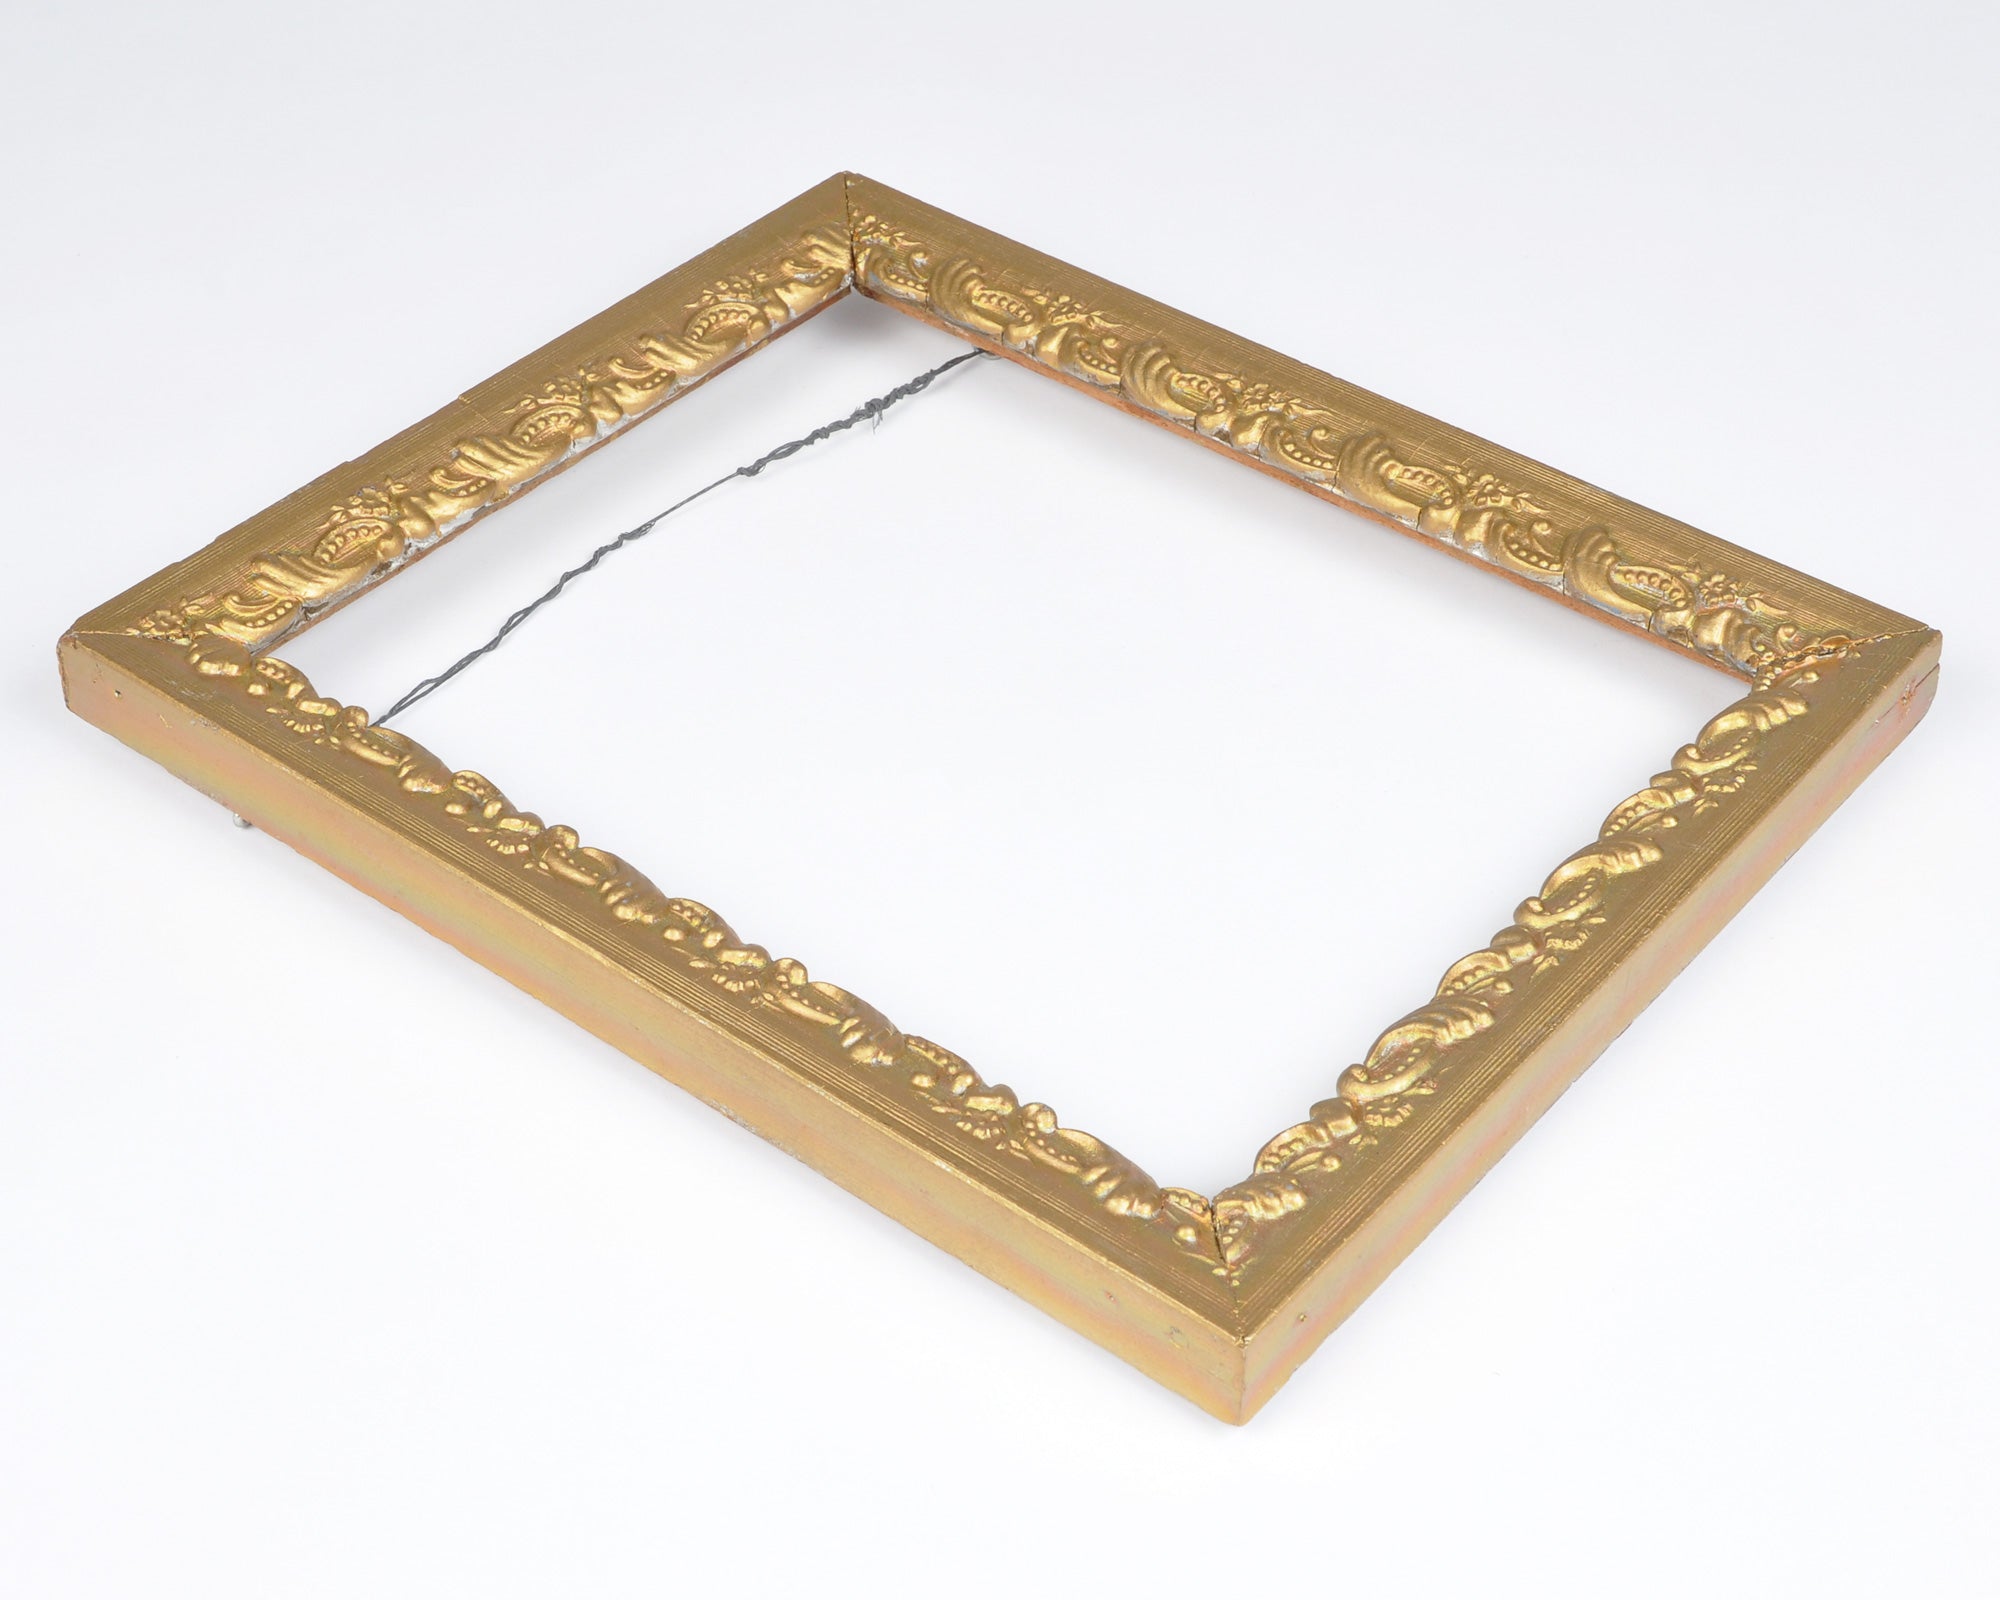 Vintage Ornate Wooden Picture Frame-Gold-Antique Victorian Style-8x10 Inch Canvas Frame Tamara Scott Designs